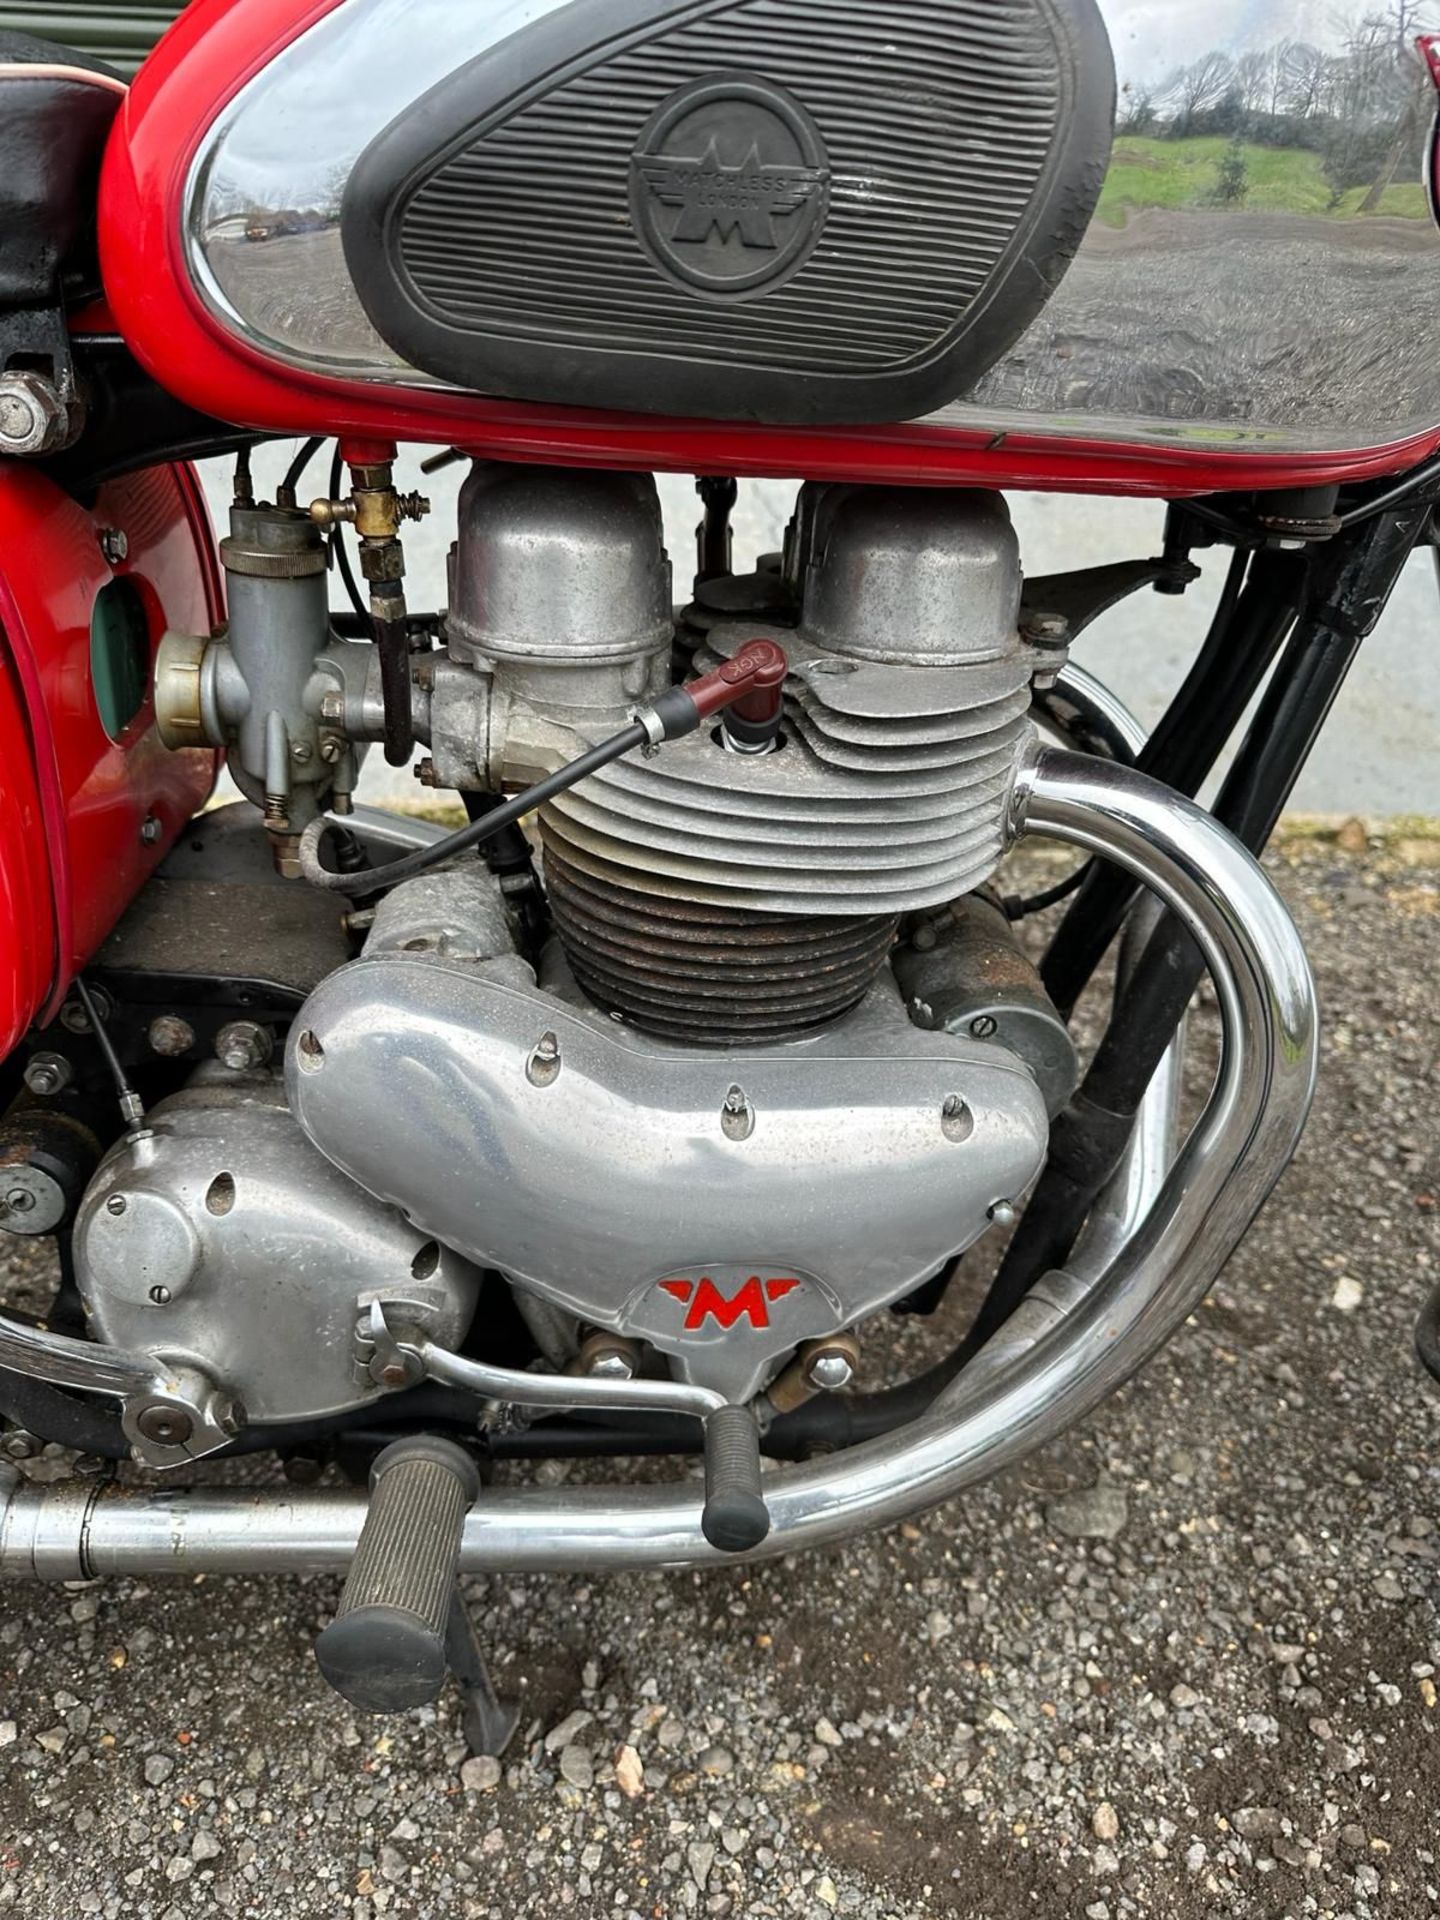 Matchless G12 CSR Motorbike, 650CC 1959 - Image 5 of 8